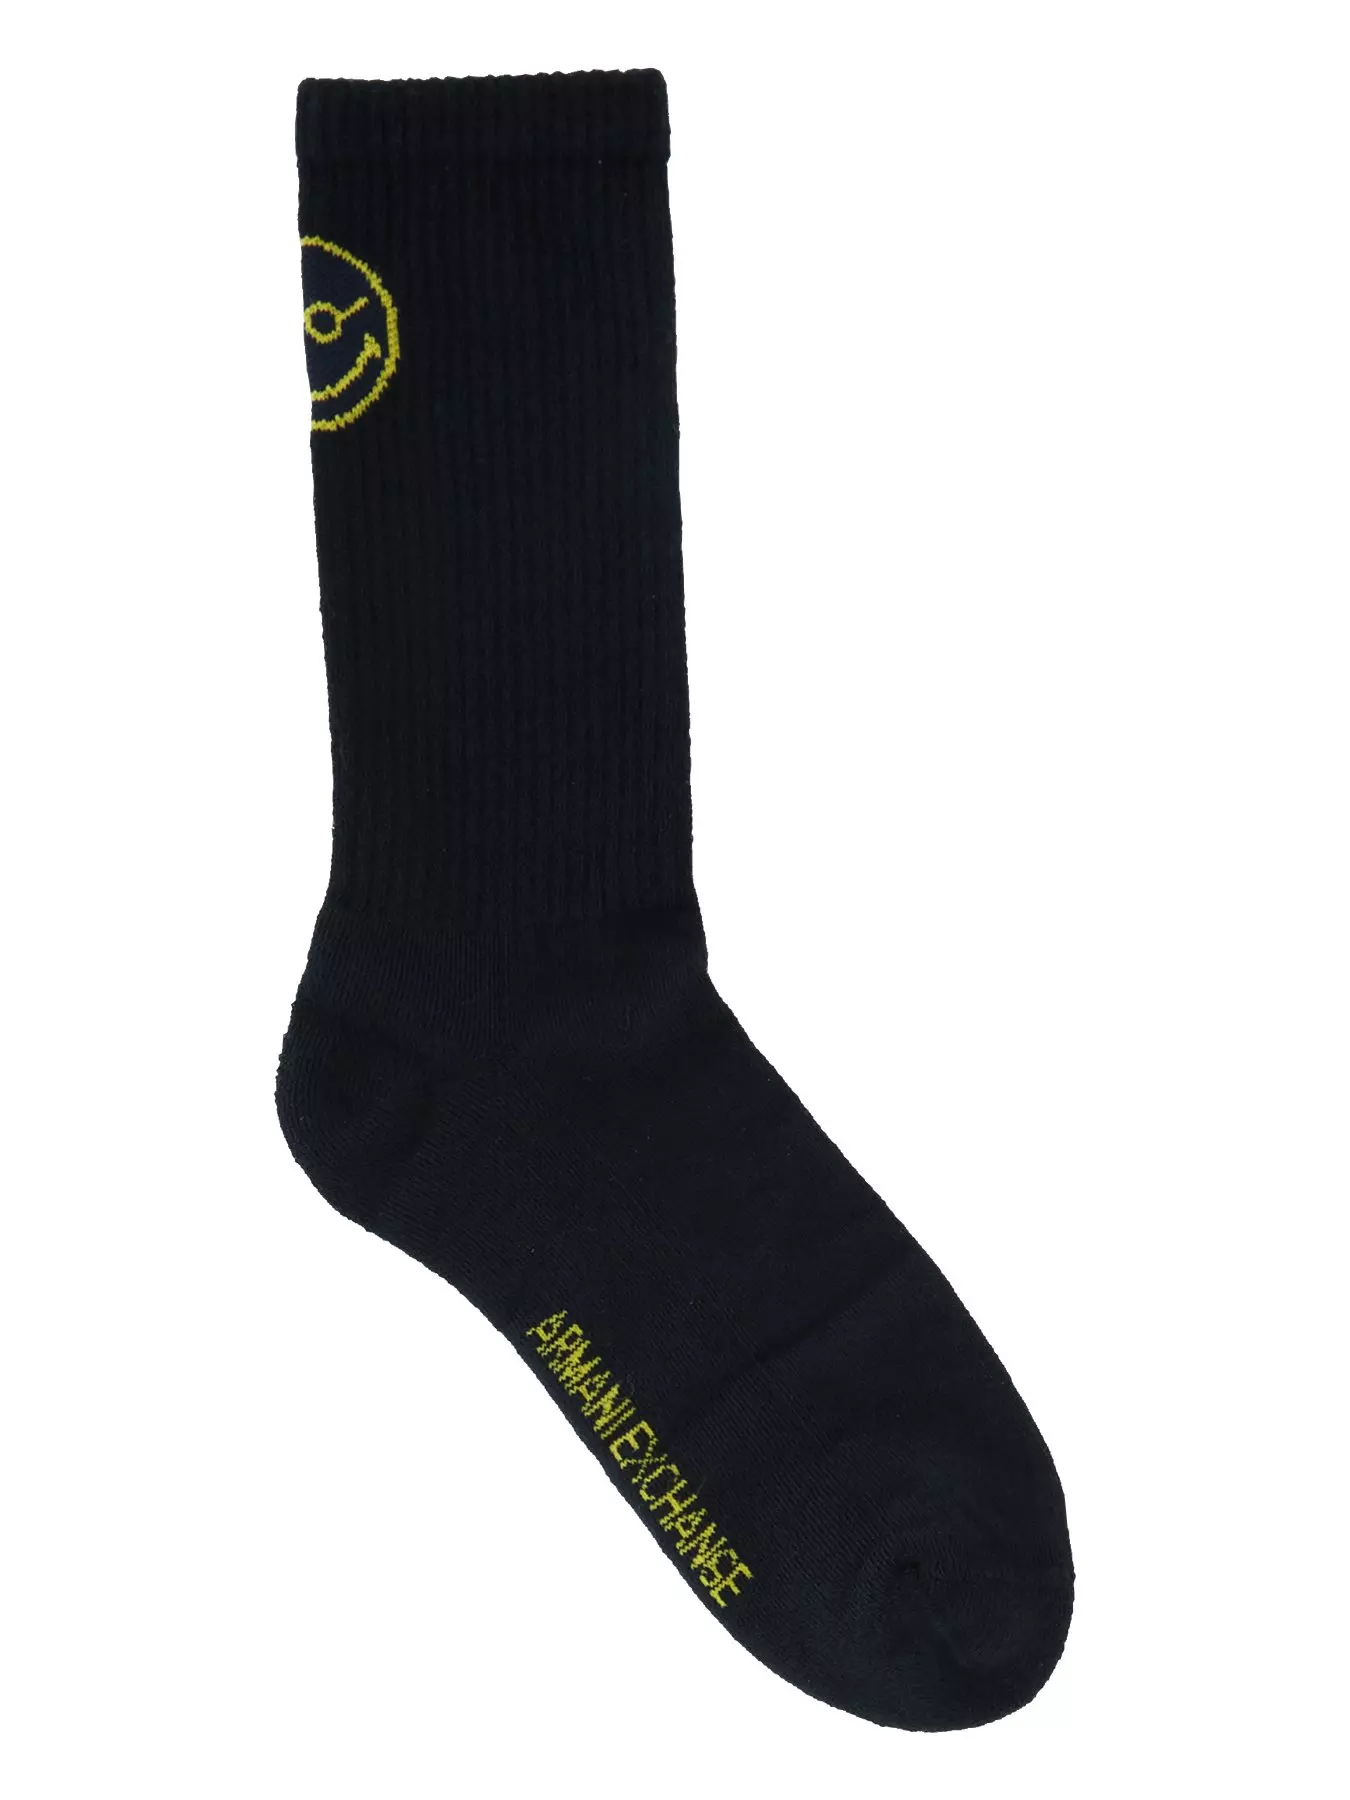 Armani Exchange Ax X Smiley Face Socks - Black 